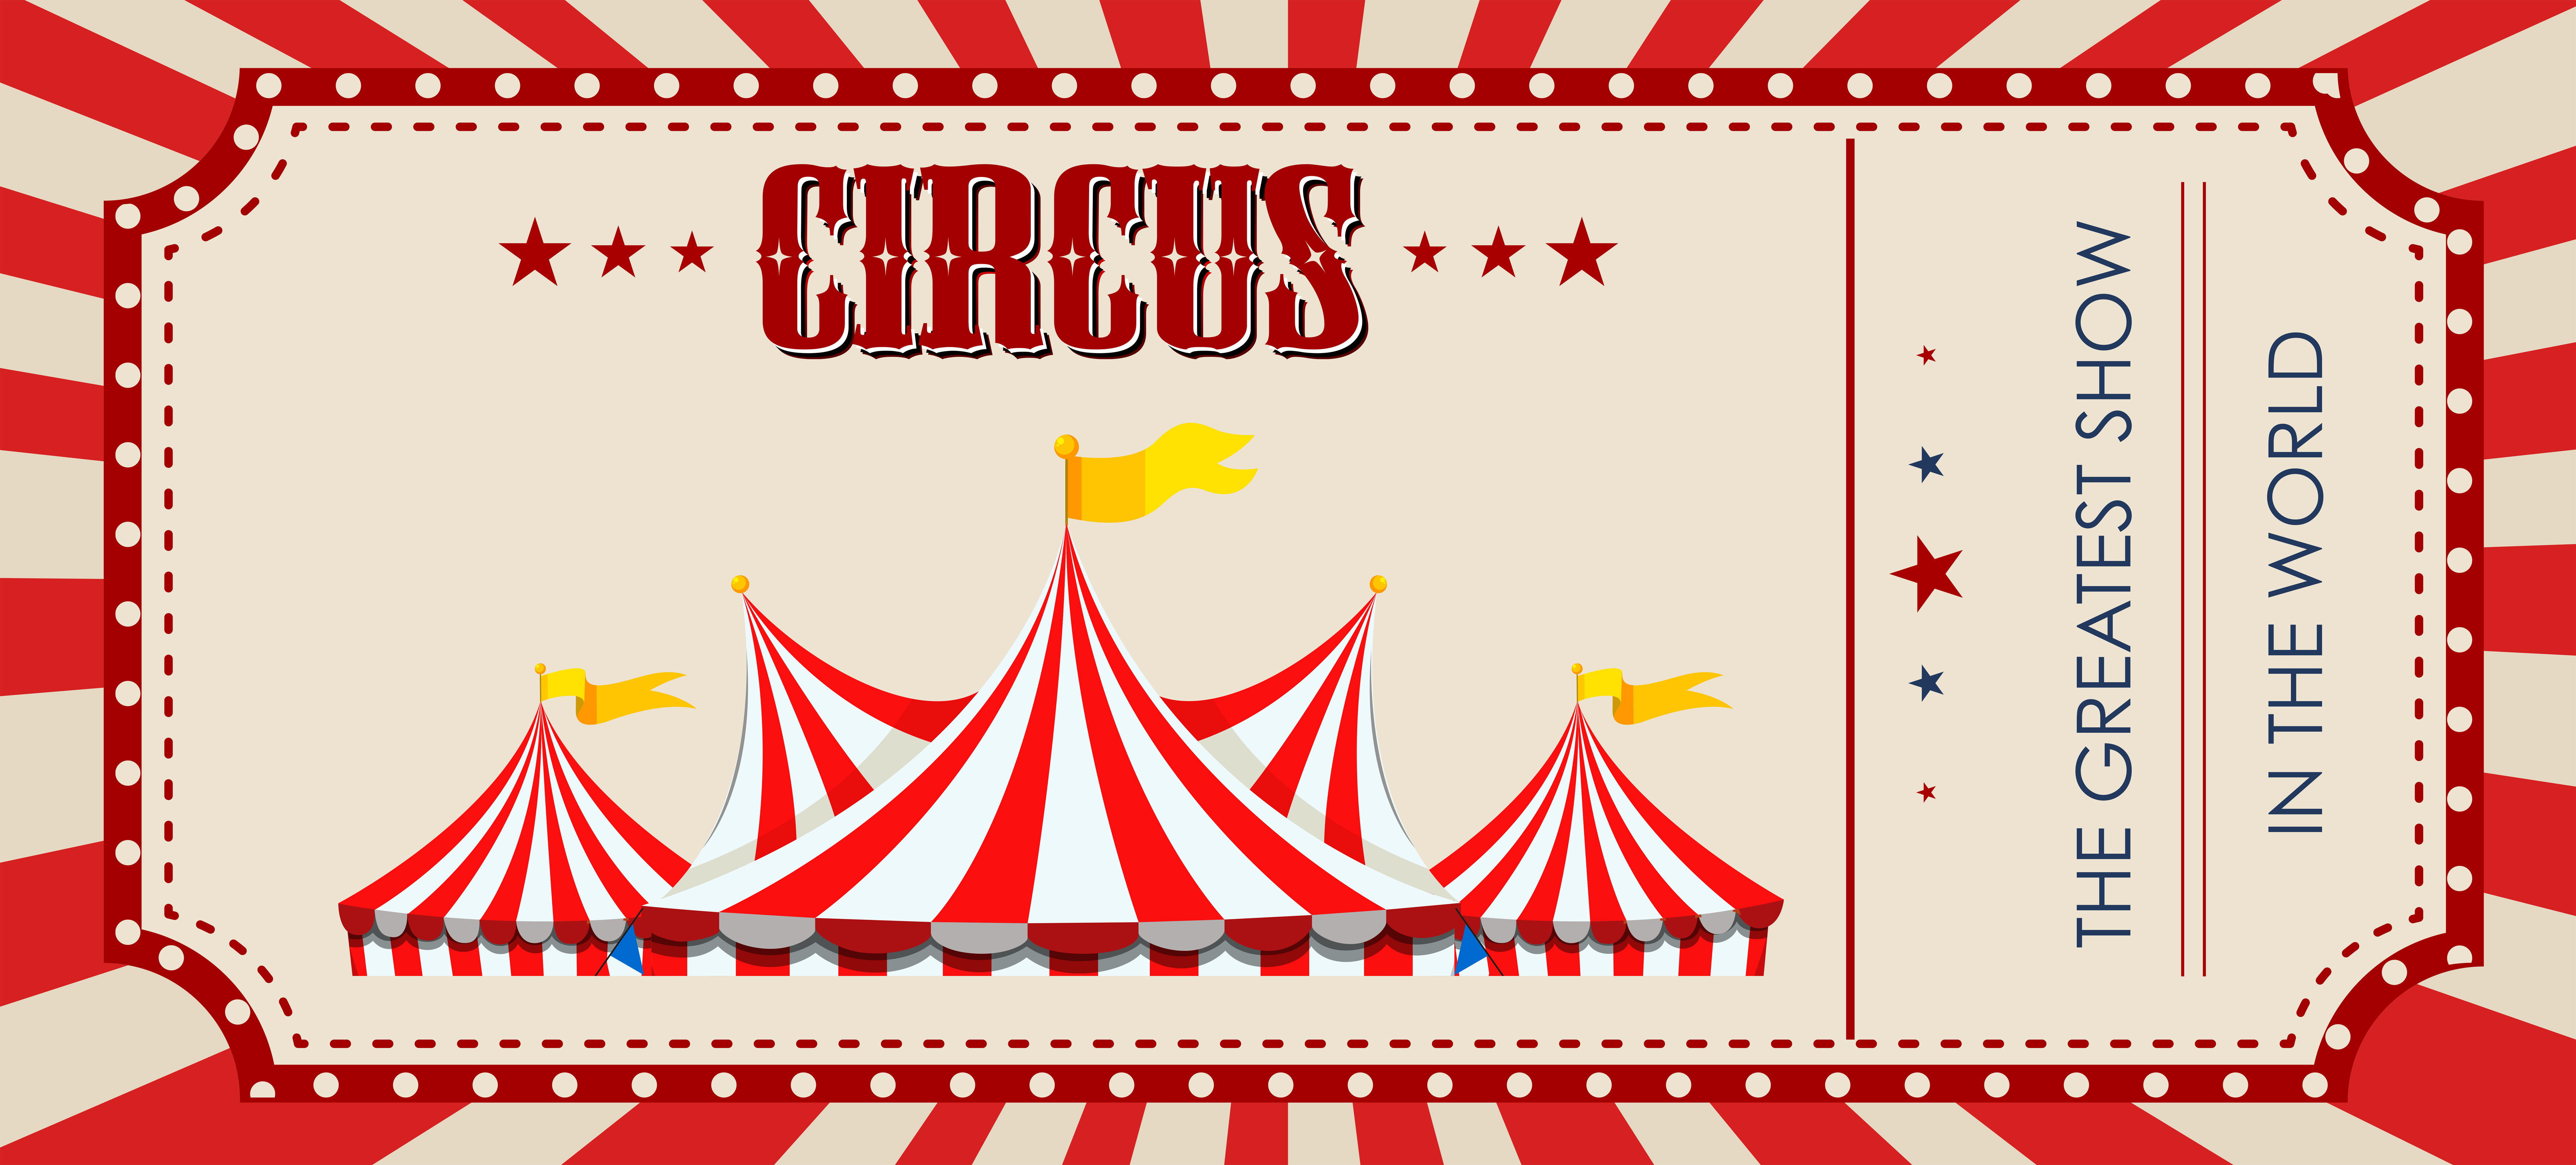 Free Printable Circus Ticket Template Printable Form, Templates and